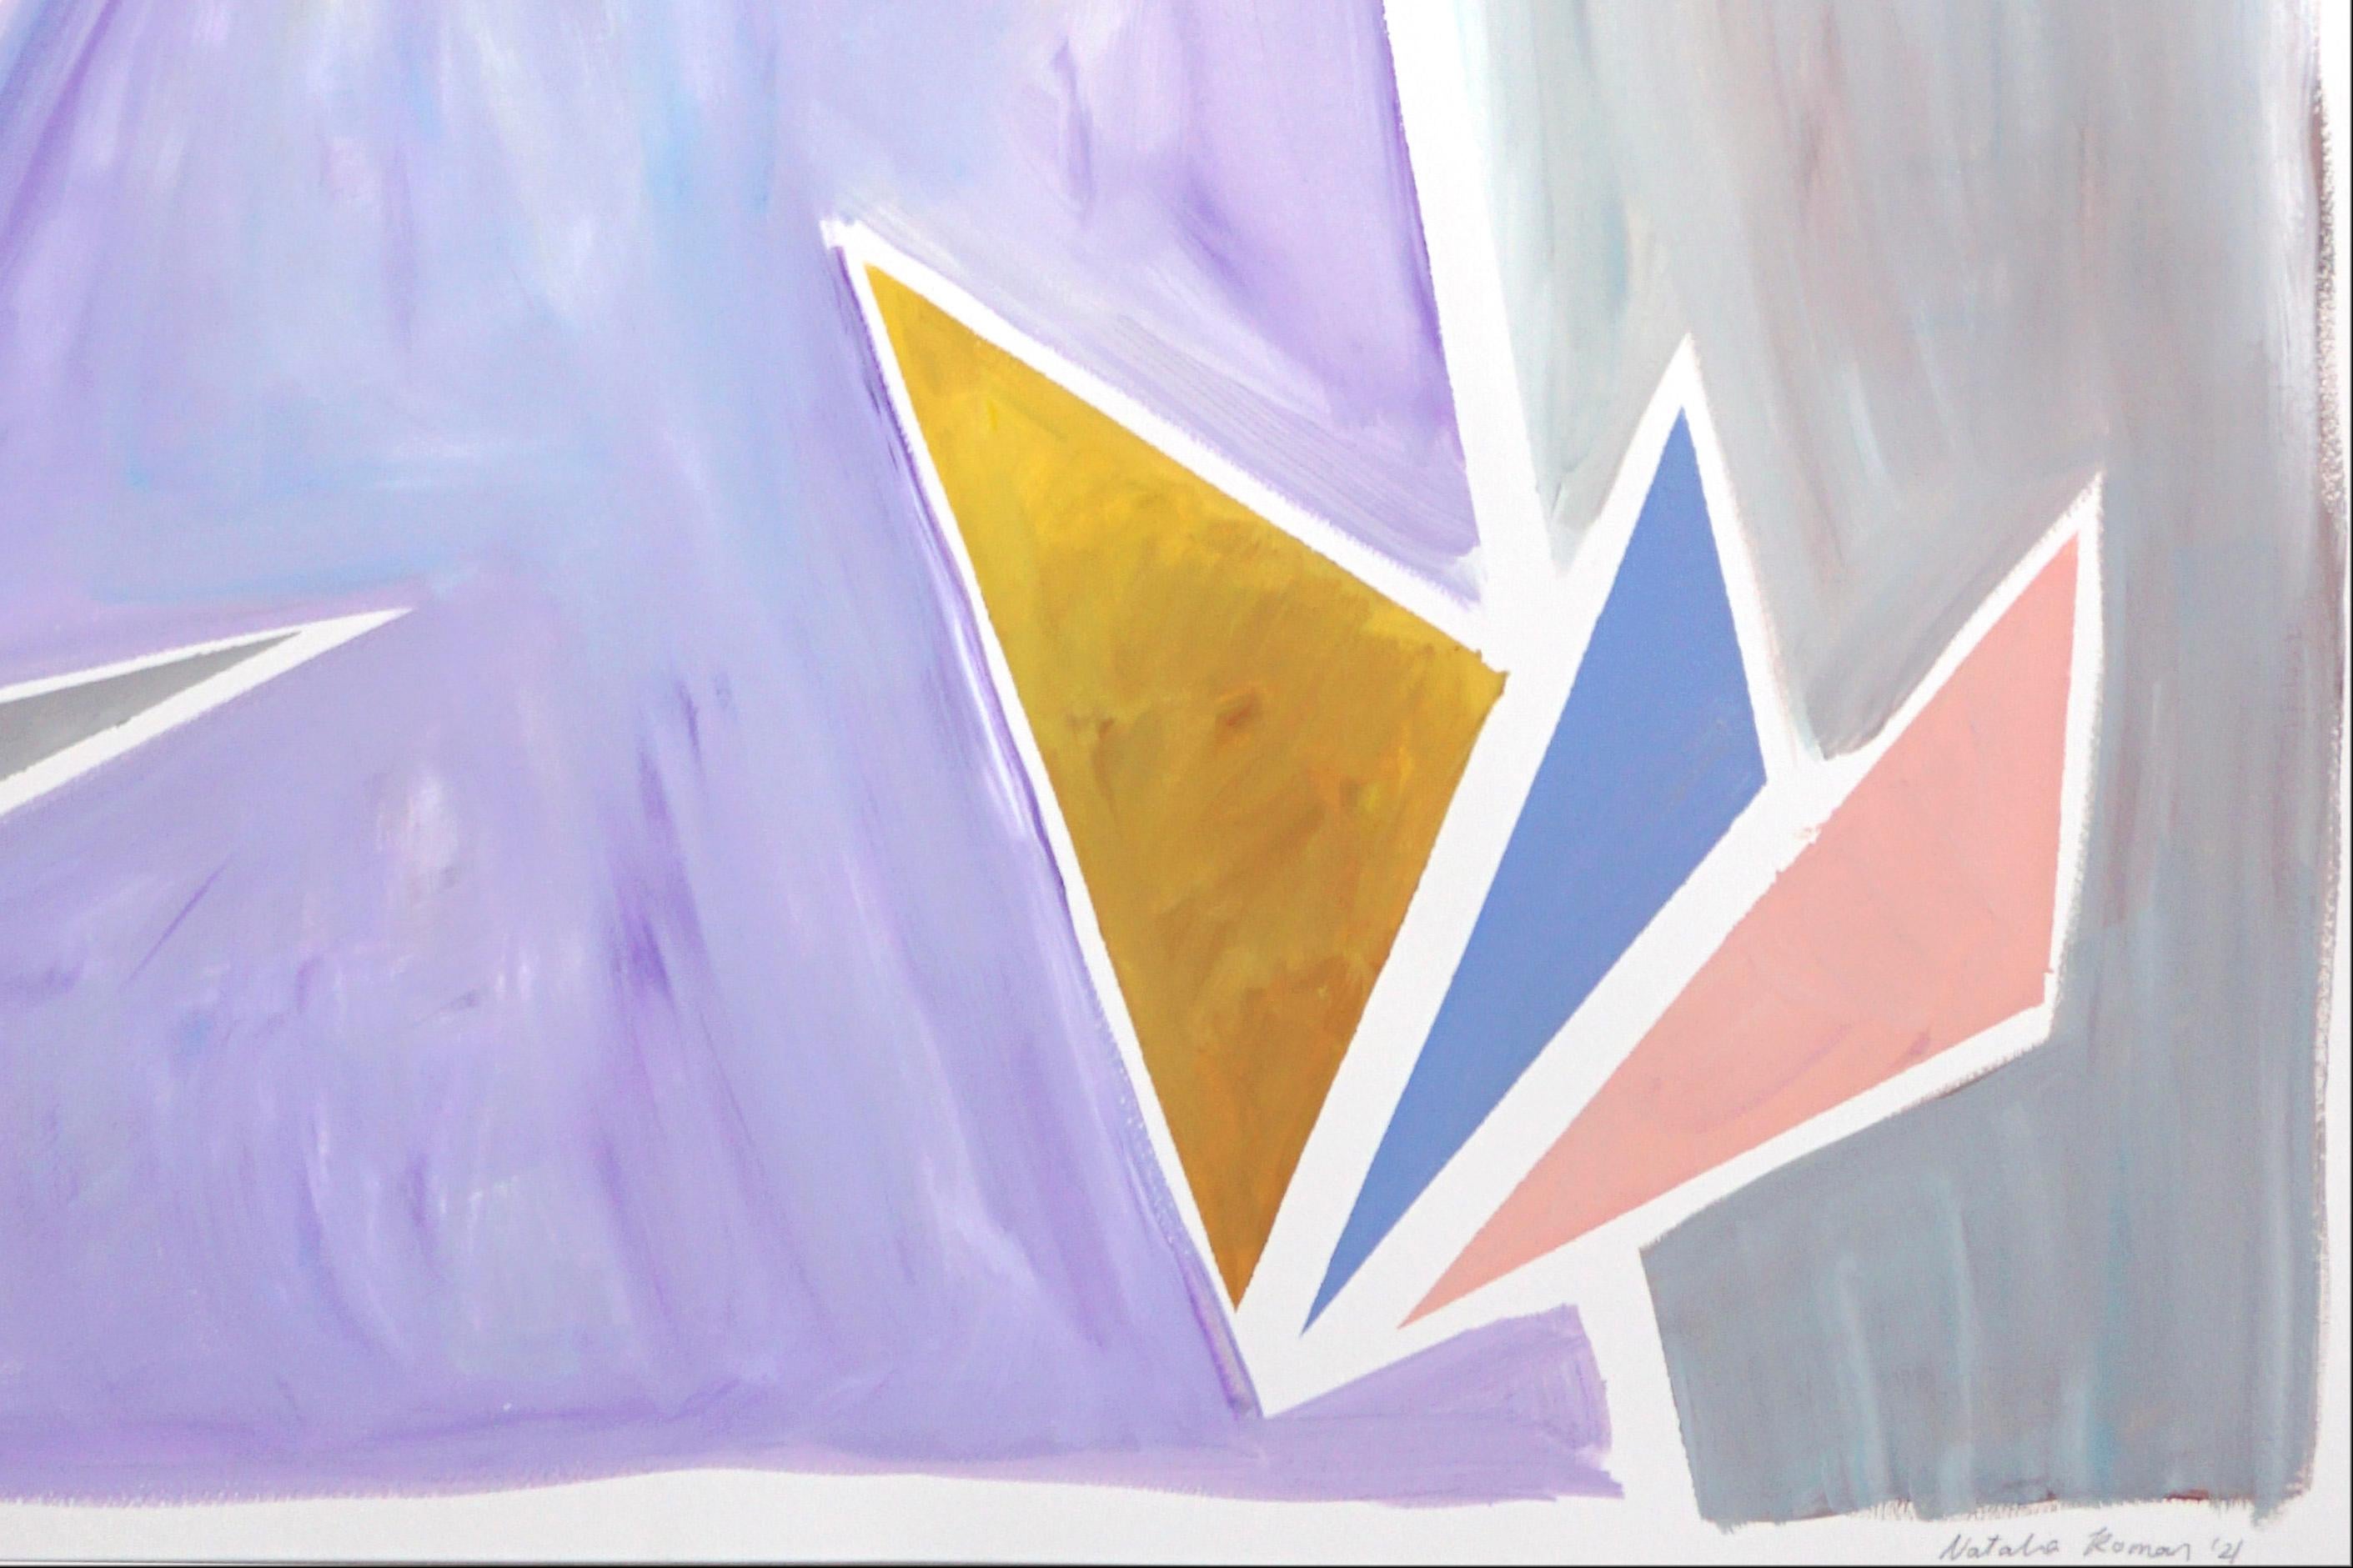 Retro Futuristic Angle Ensemble, Constructivist Painting Diptych in Pastel Tones 3